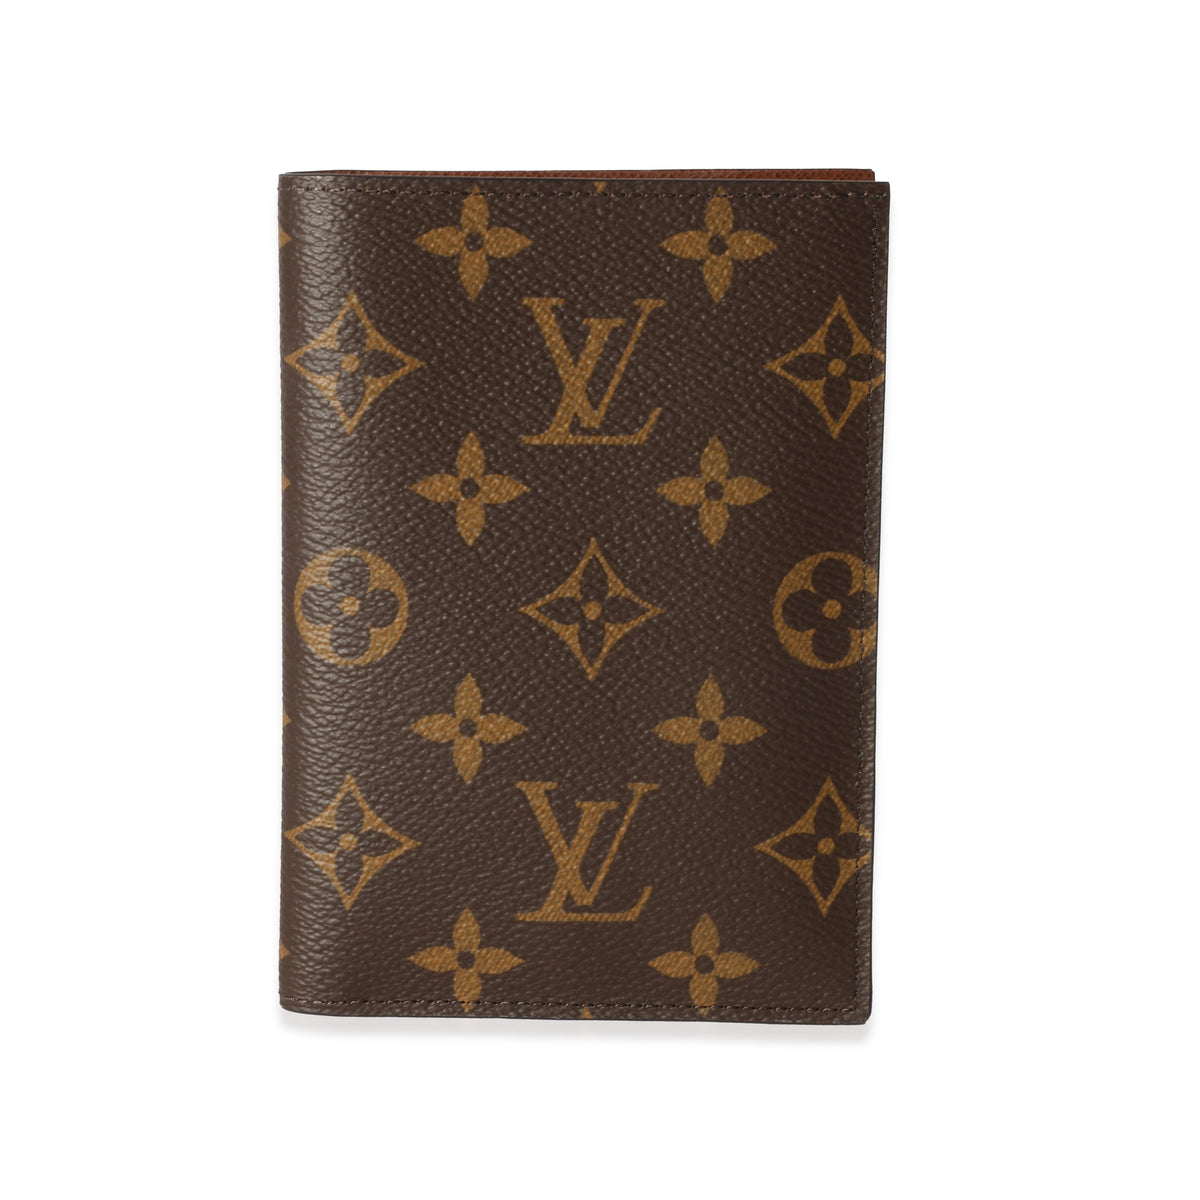 Louis Vuitton BRAND NEW Monogram Canvas PASSPORT COVER